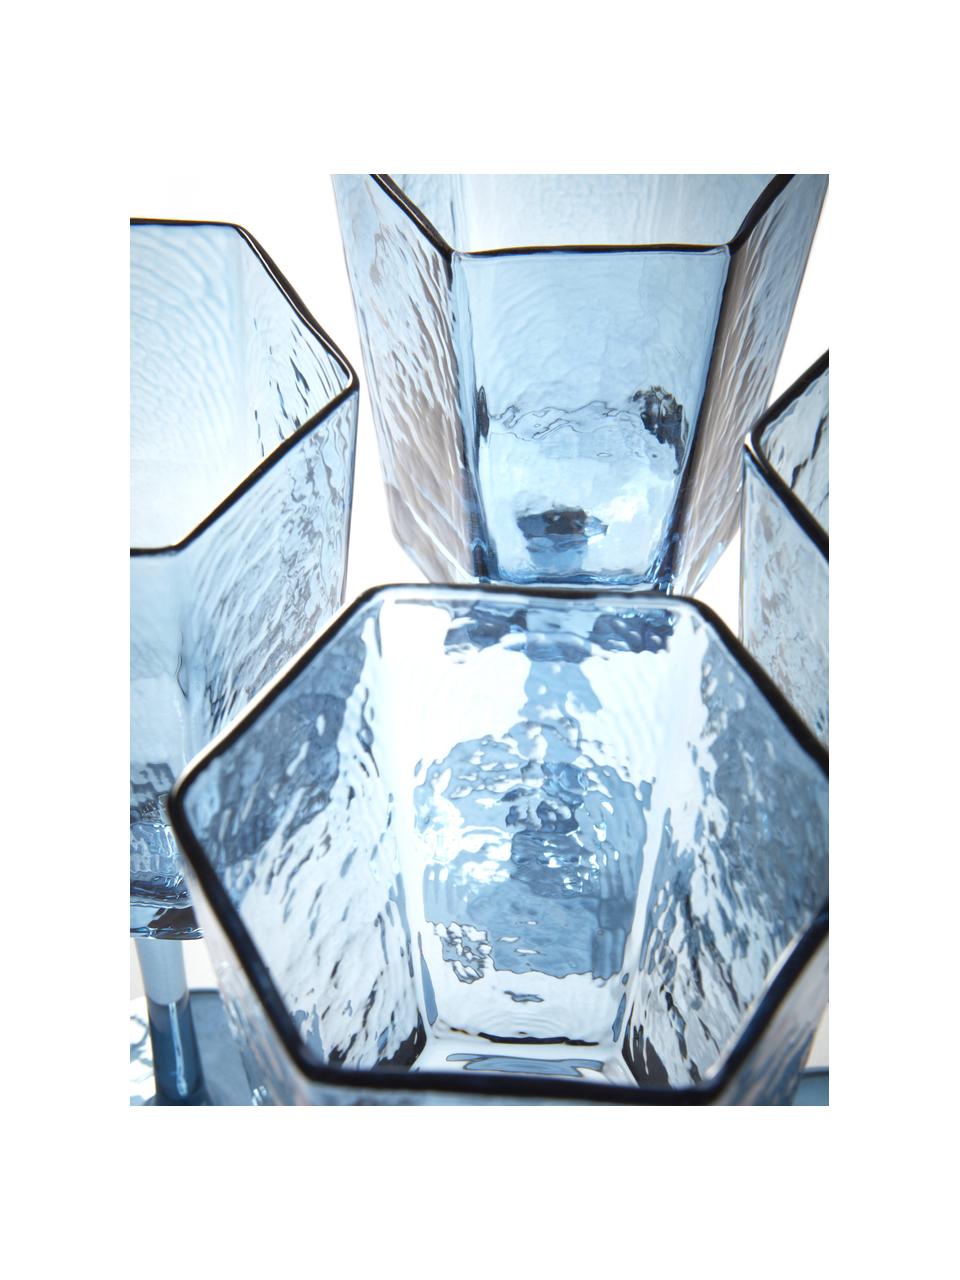 Weingläser Amory in Blau, 4 Stück, Glas, Blau, transparent, Ø 9 x H 22 cm, 350 ml